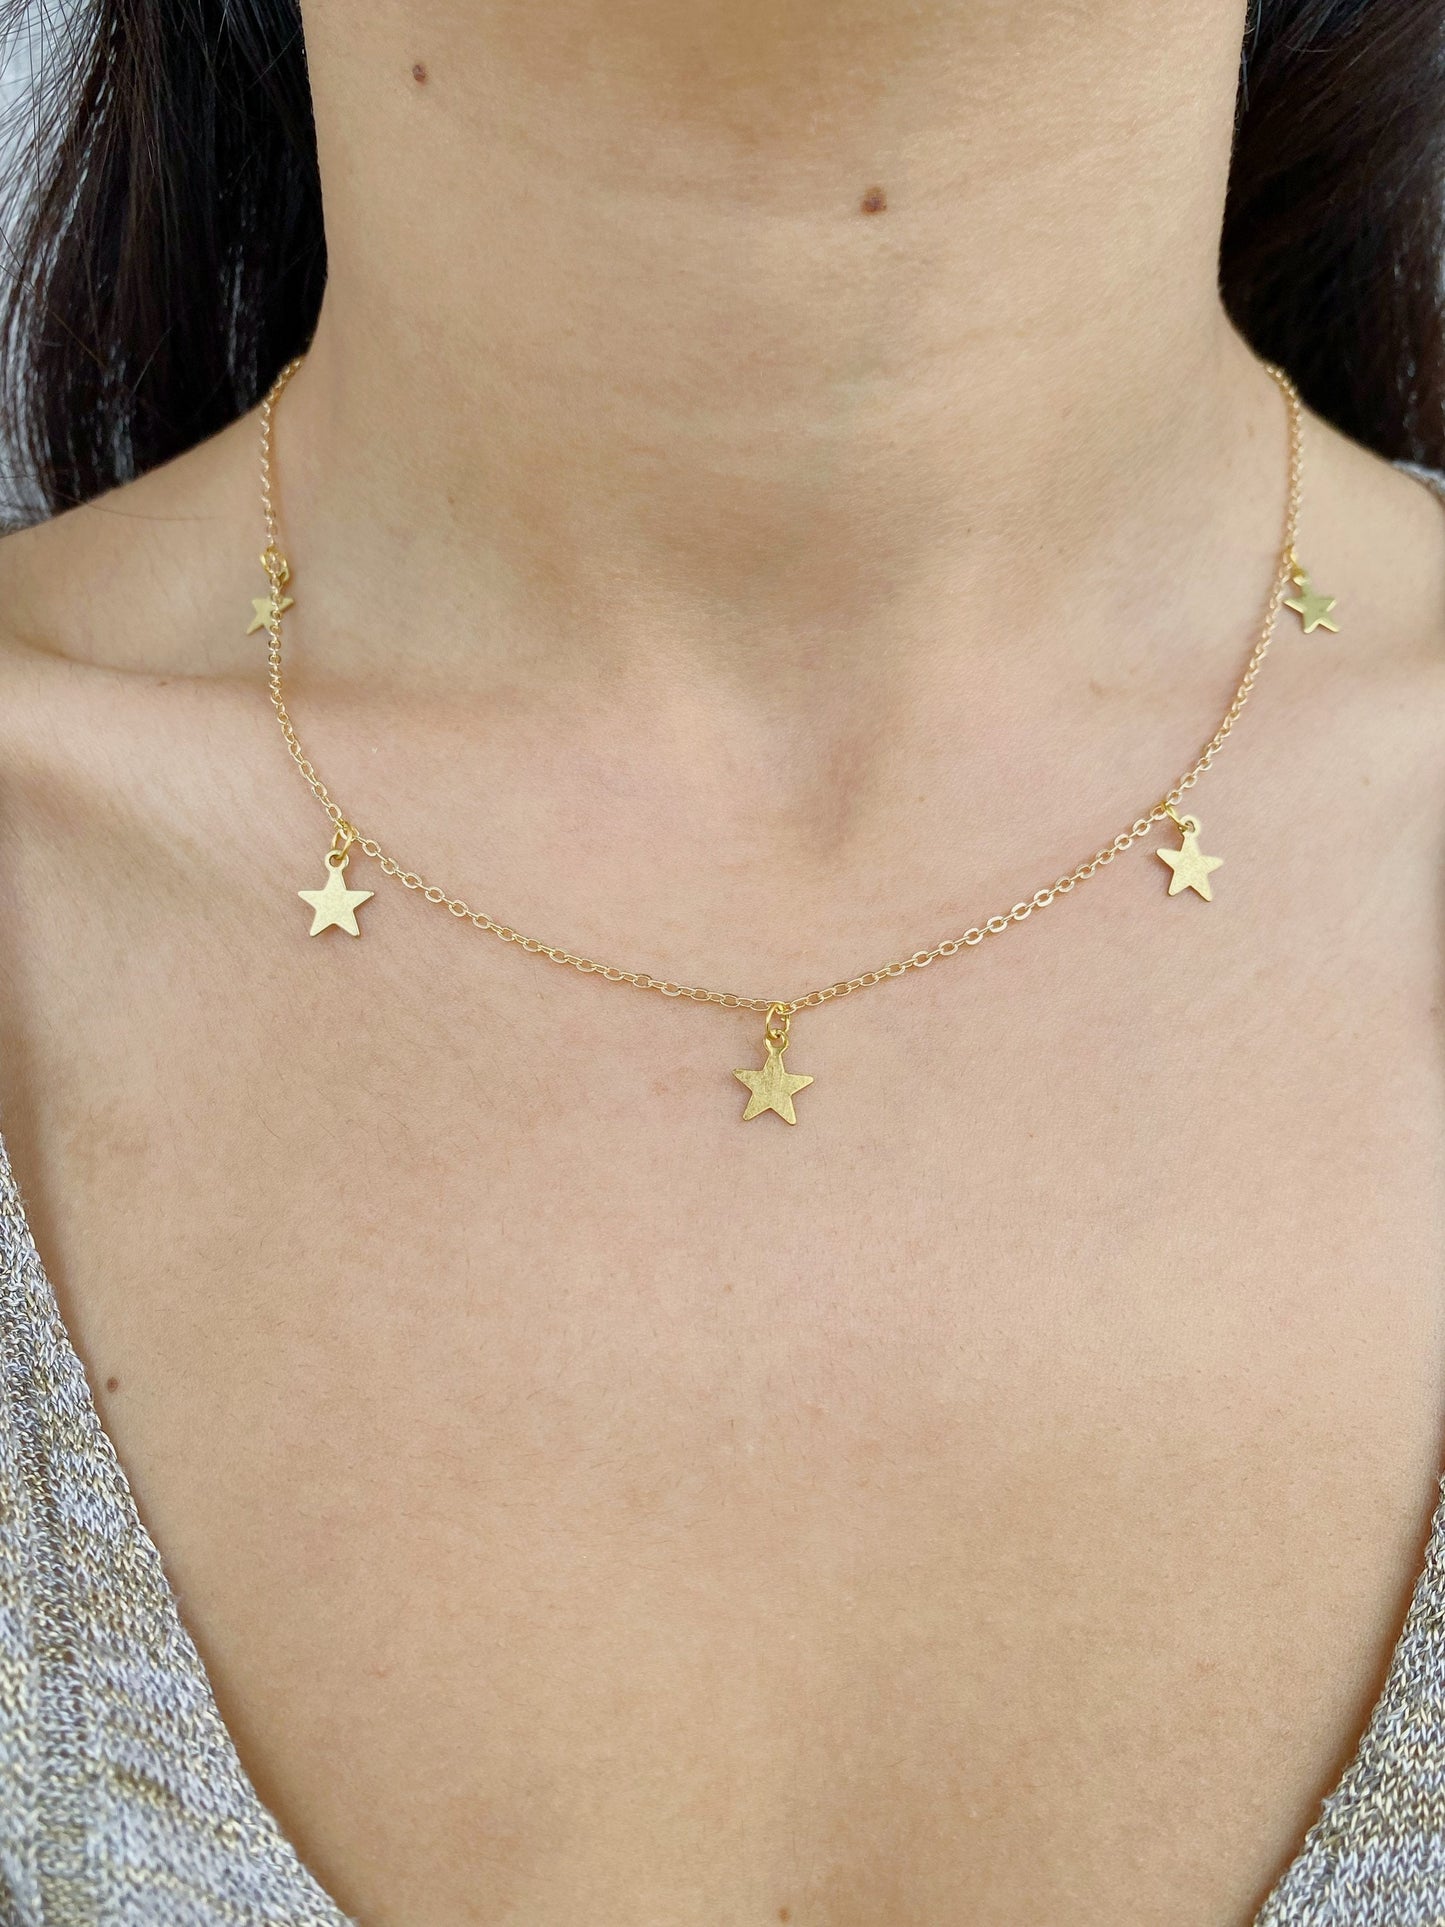 Starm Charm Necklace • Gold Star Charm Strand • Tiny Small Star Layered Choker